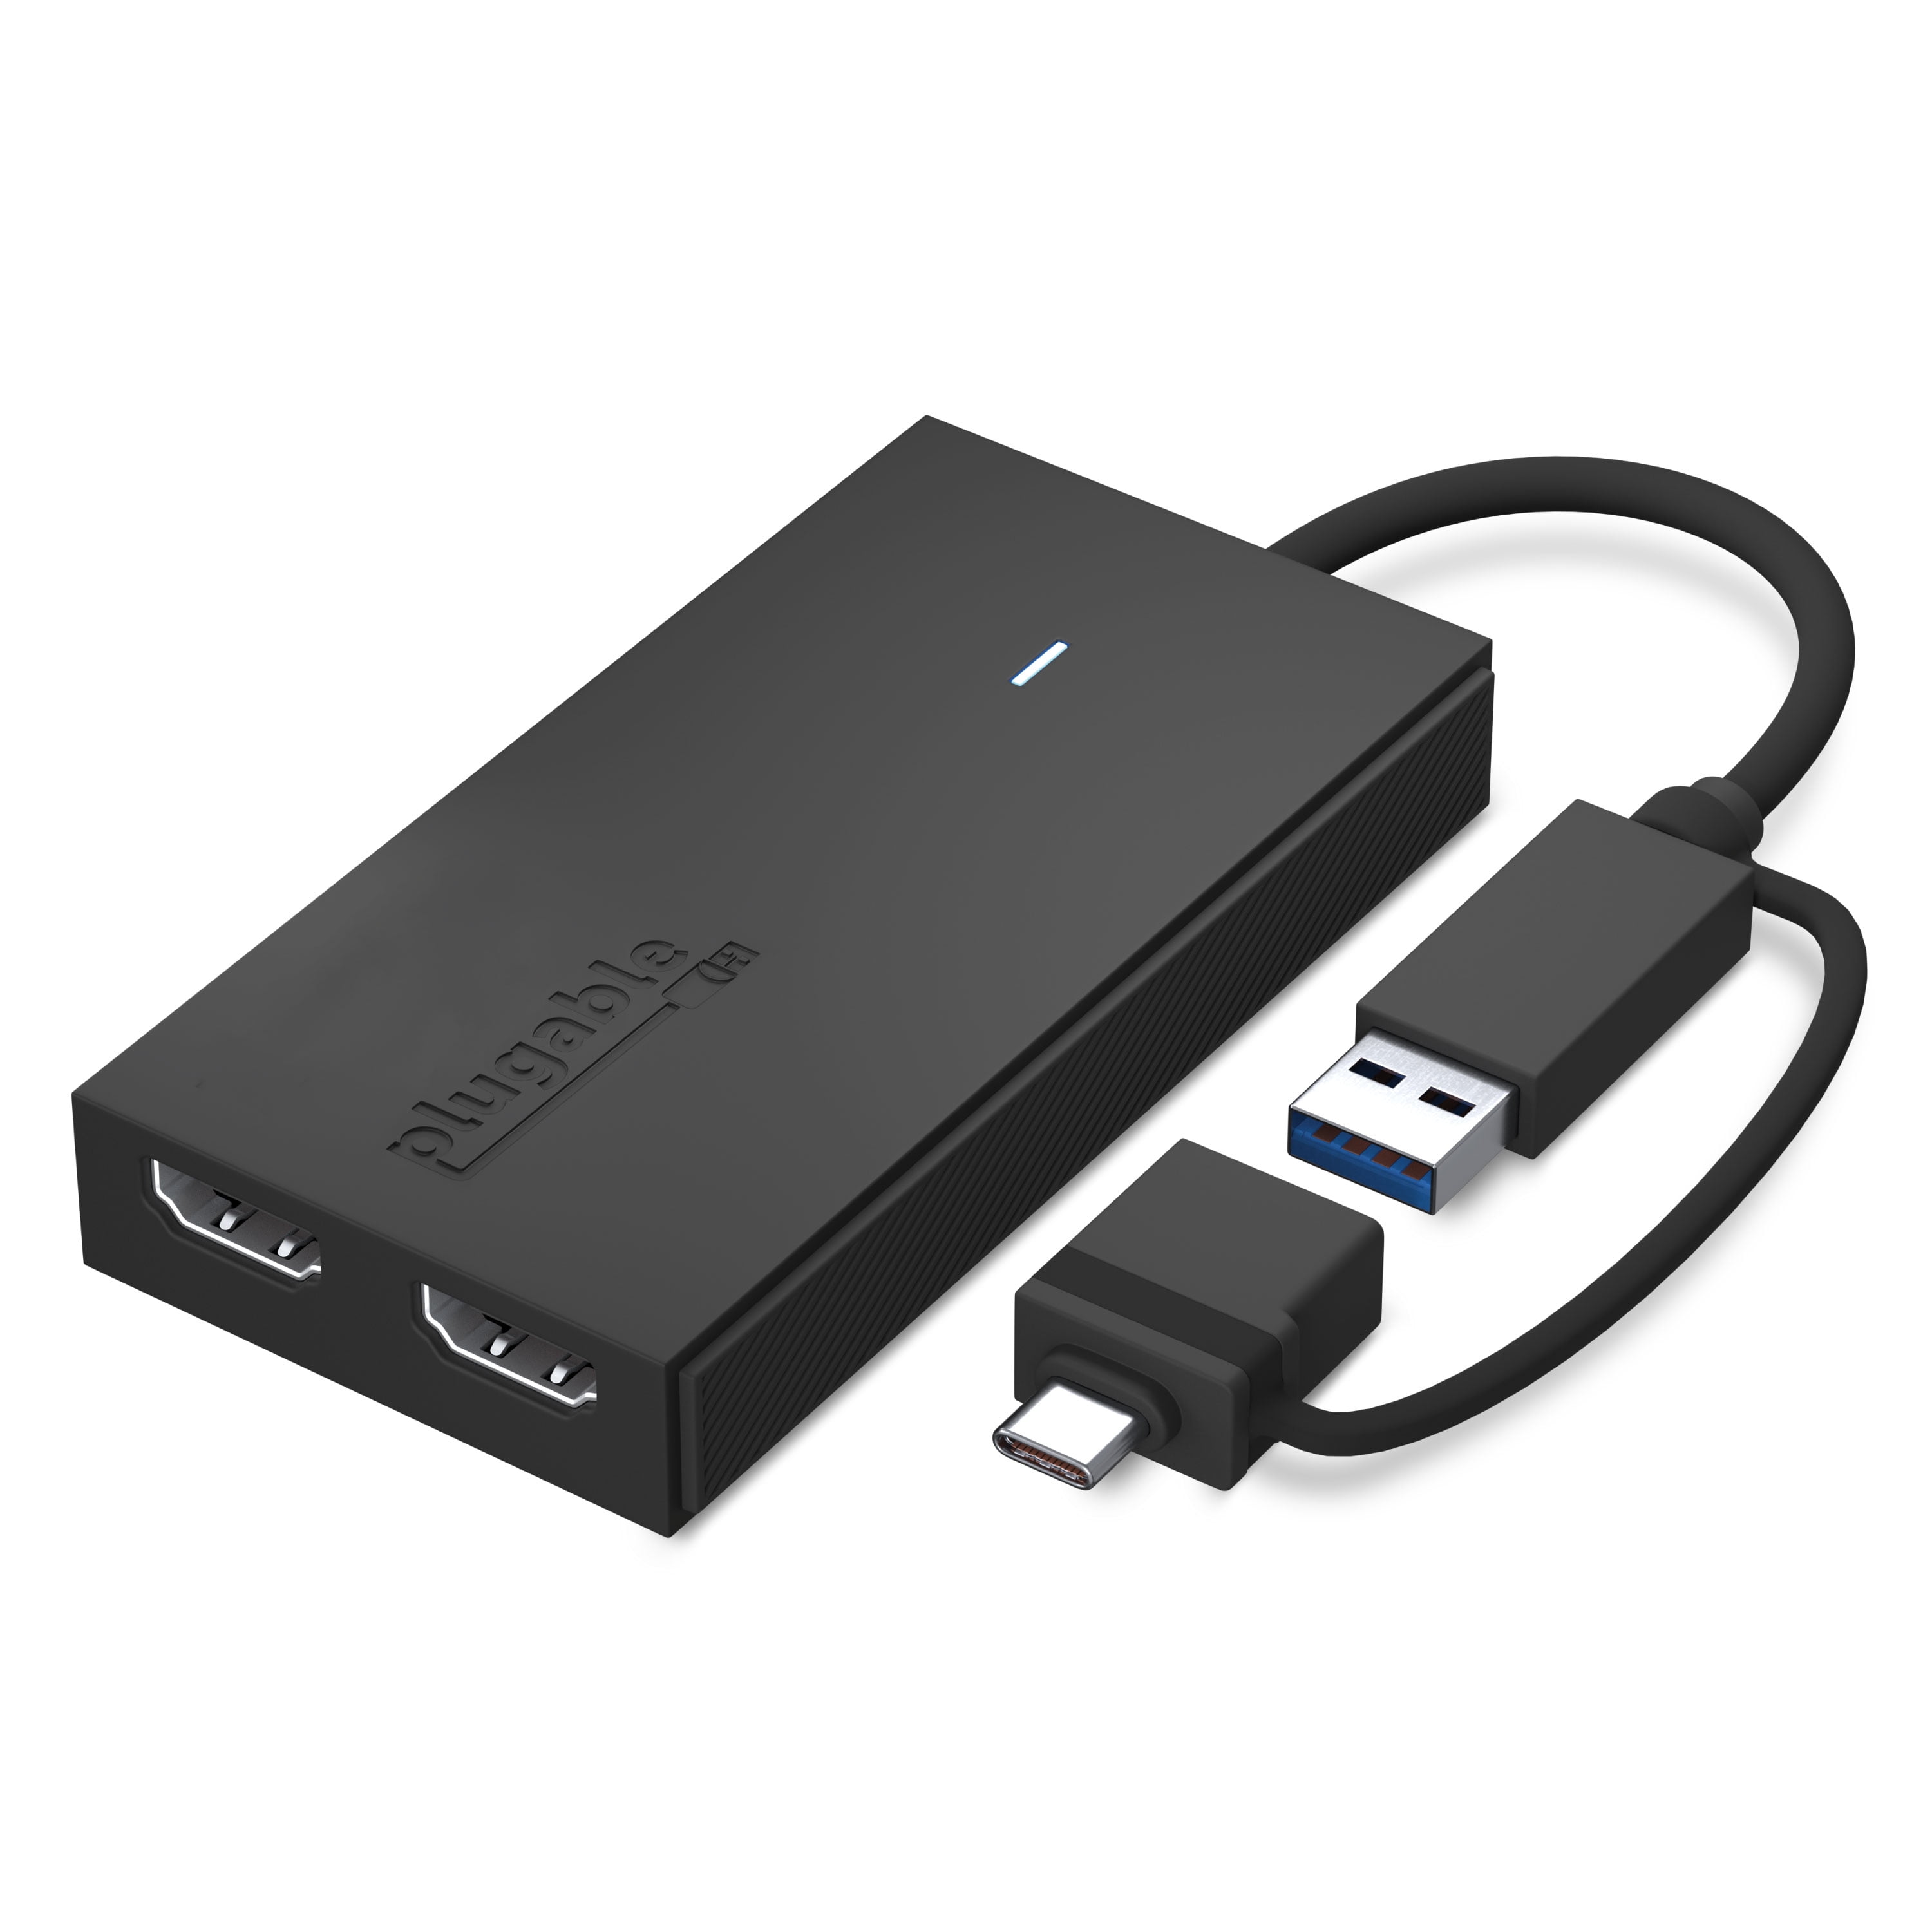 Næsten husmor profil Plugable USB 3.0 or USB C to HDMI Adapter for Dual Monitors, Universal  Video Graphics Adapter for Mac and Windows, Thunderbolt 3 / 4, USB 3.0 or  USB-C, 1080p@60Hz - Walmart.com